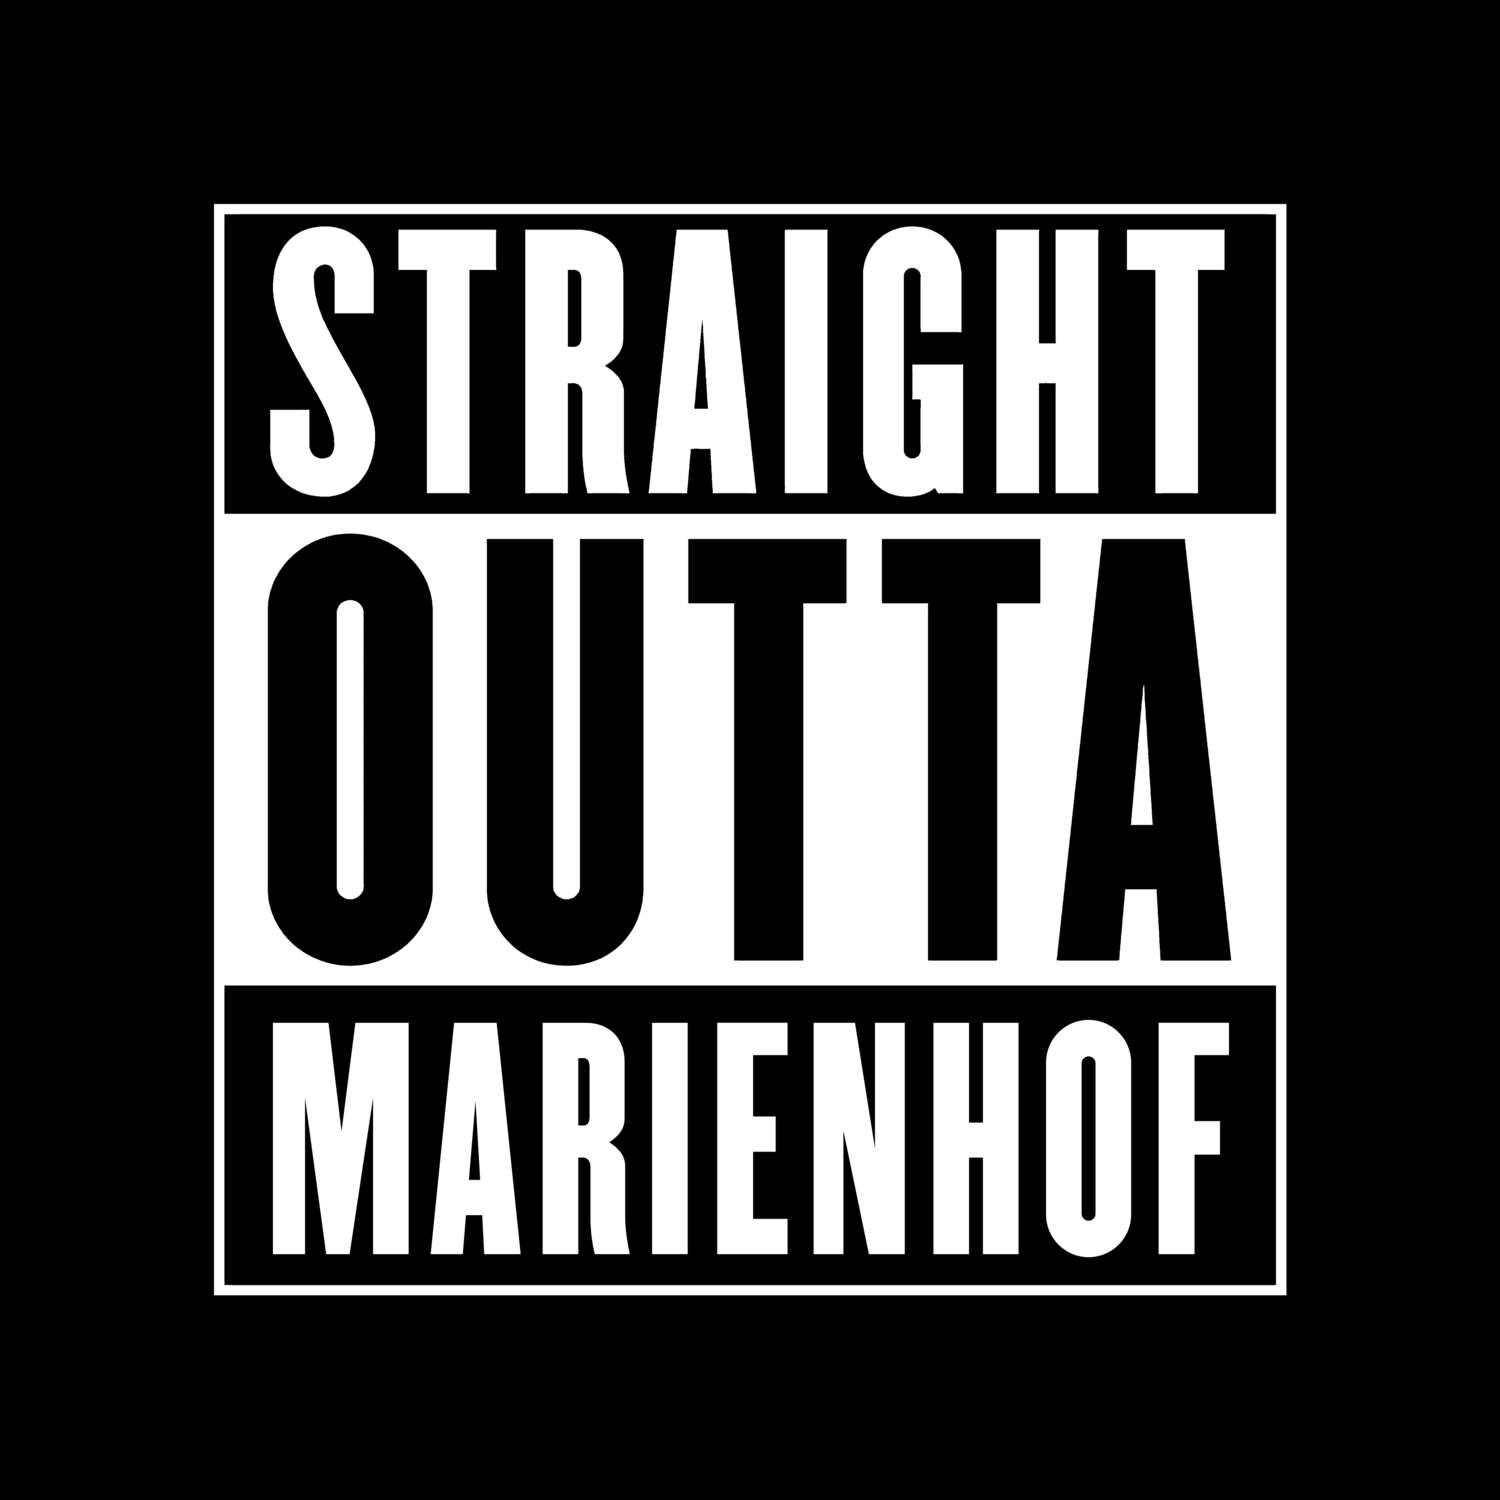 Marienhof T-Shirt »Straight Outta«